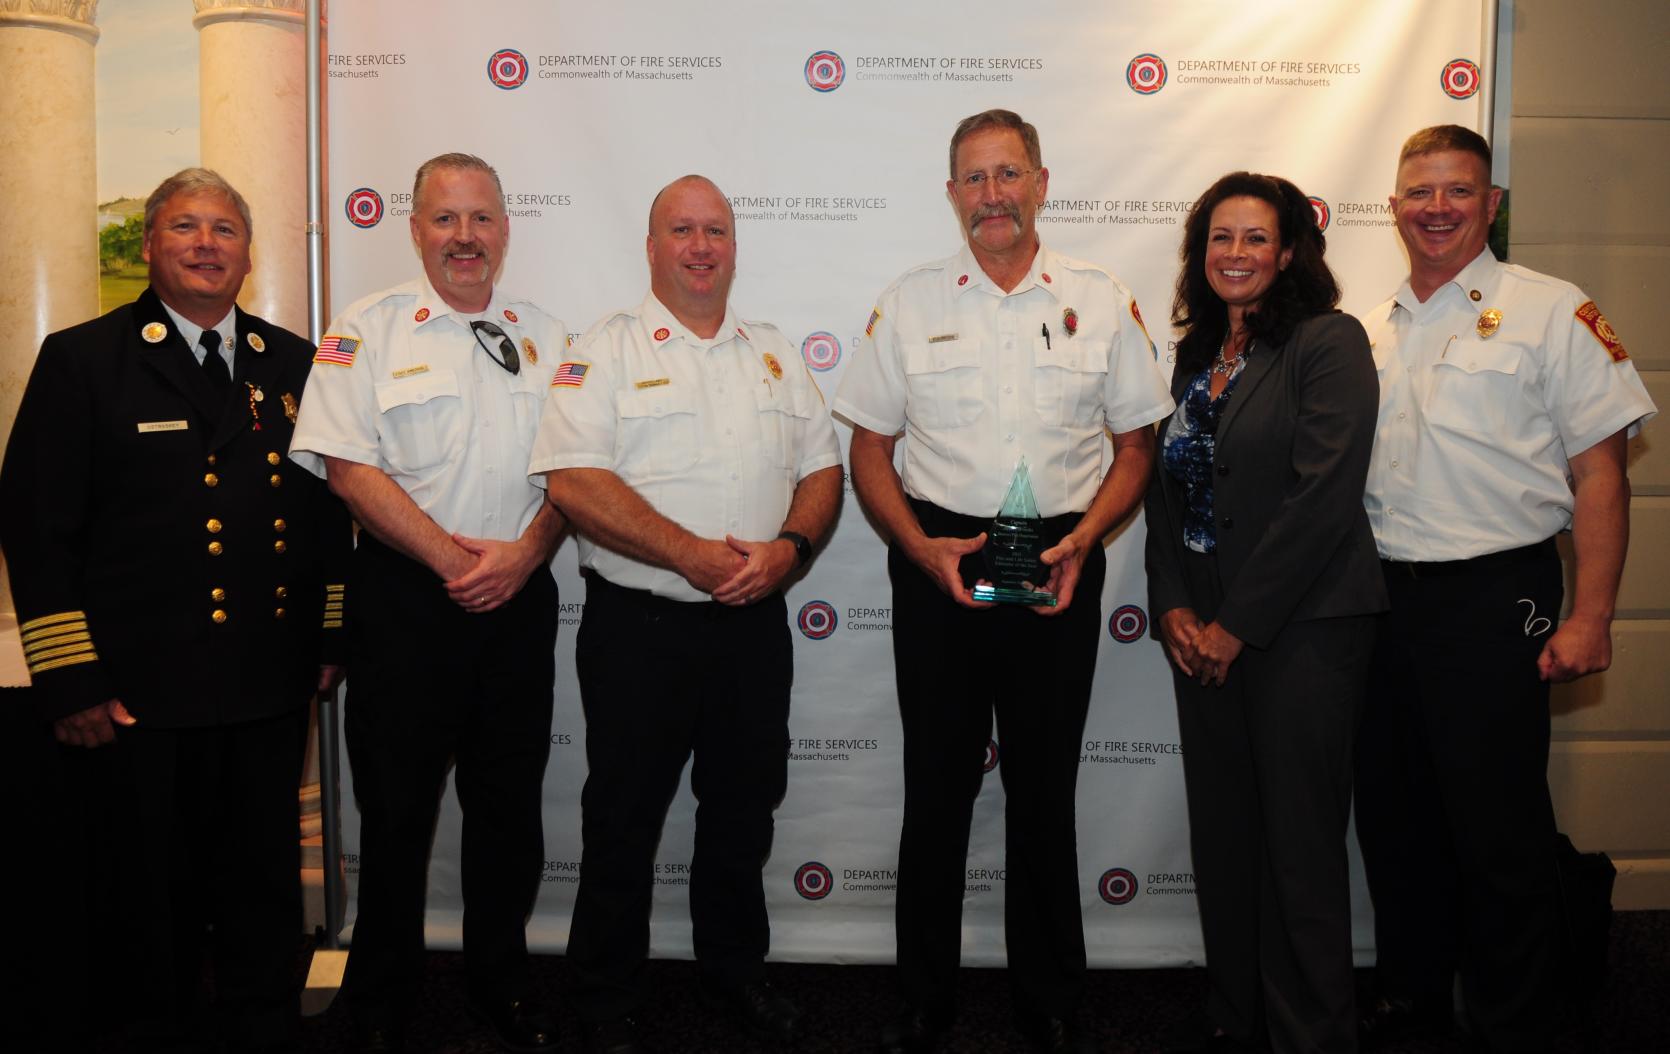 Captain James Brooks receiving an award with fire officials